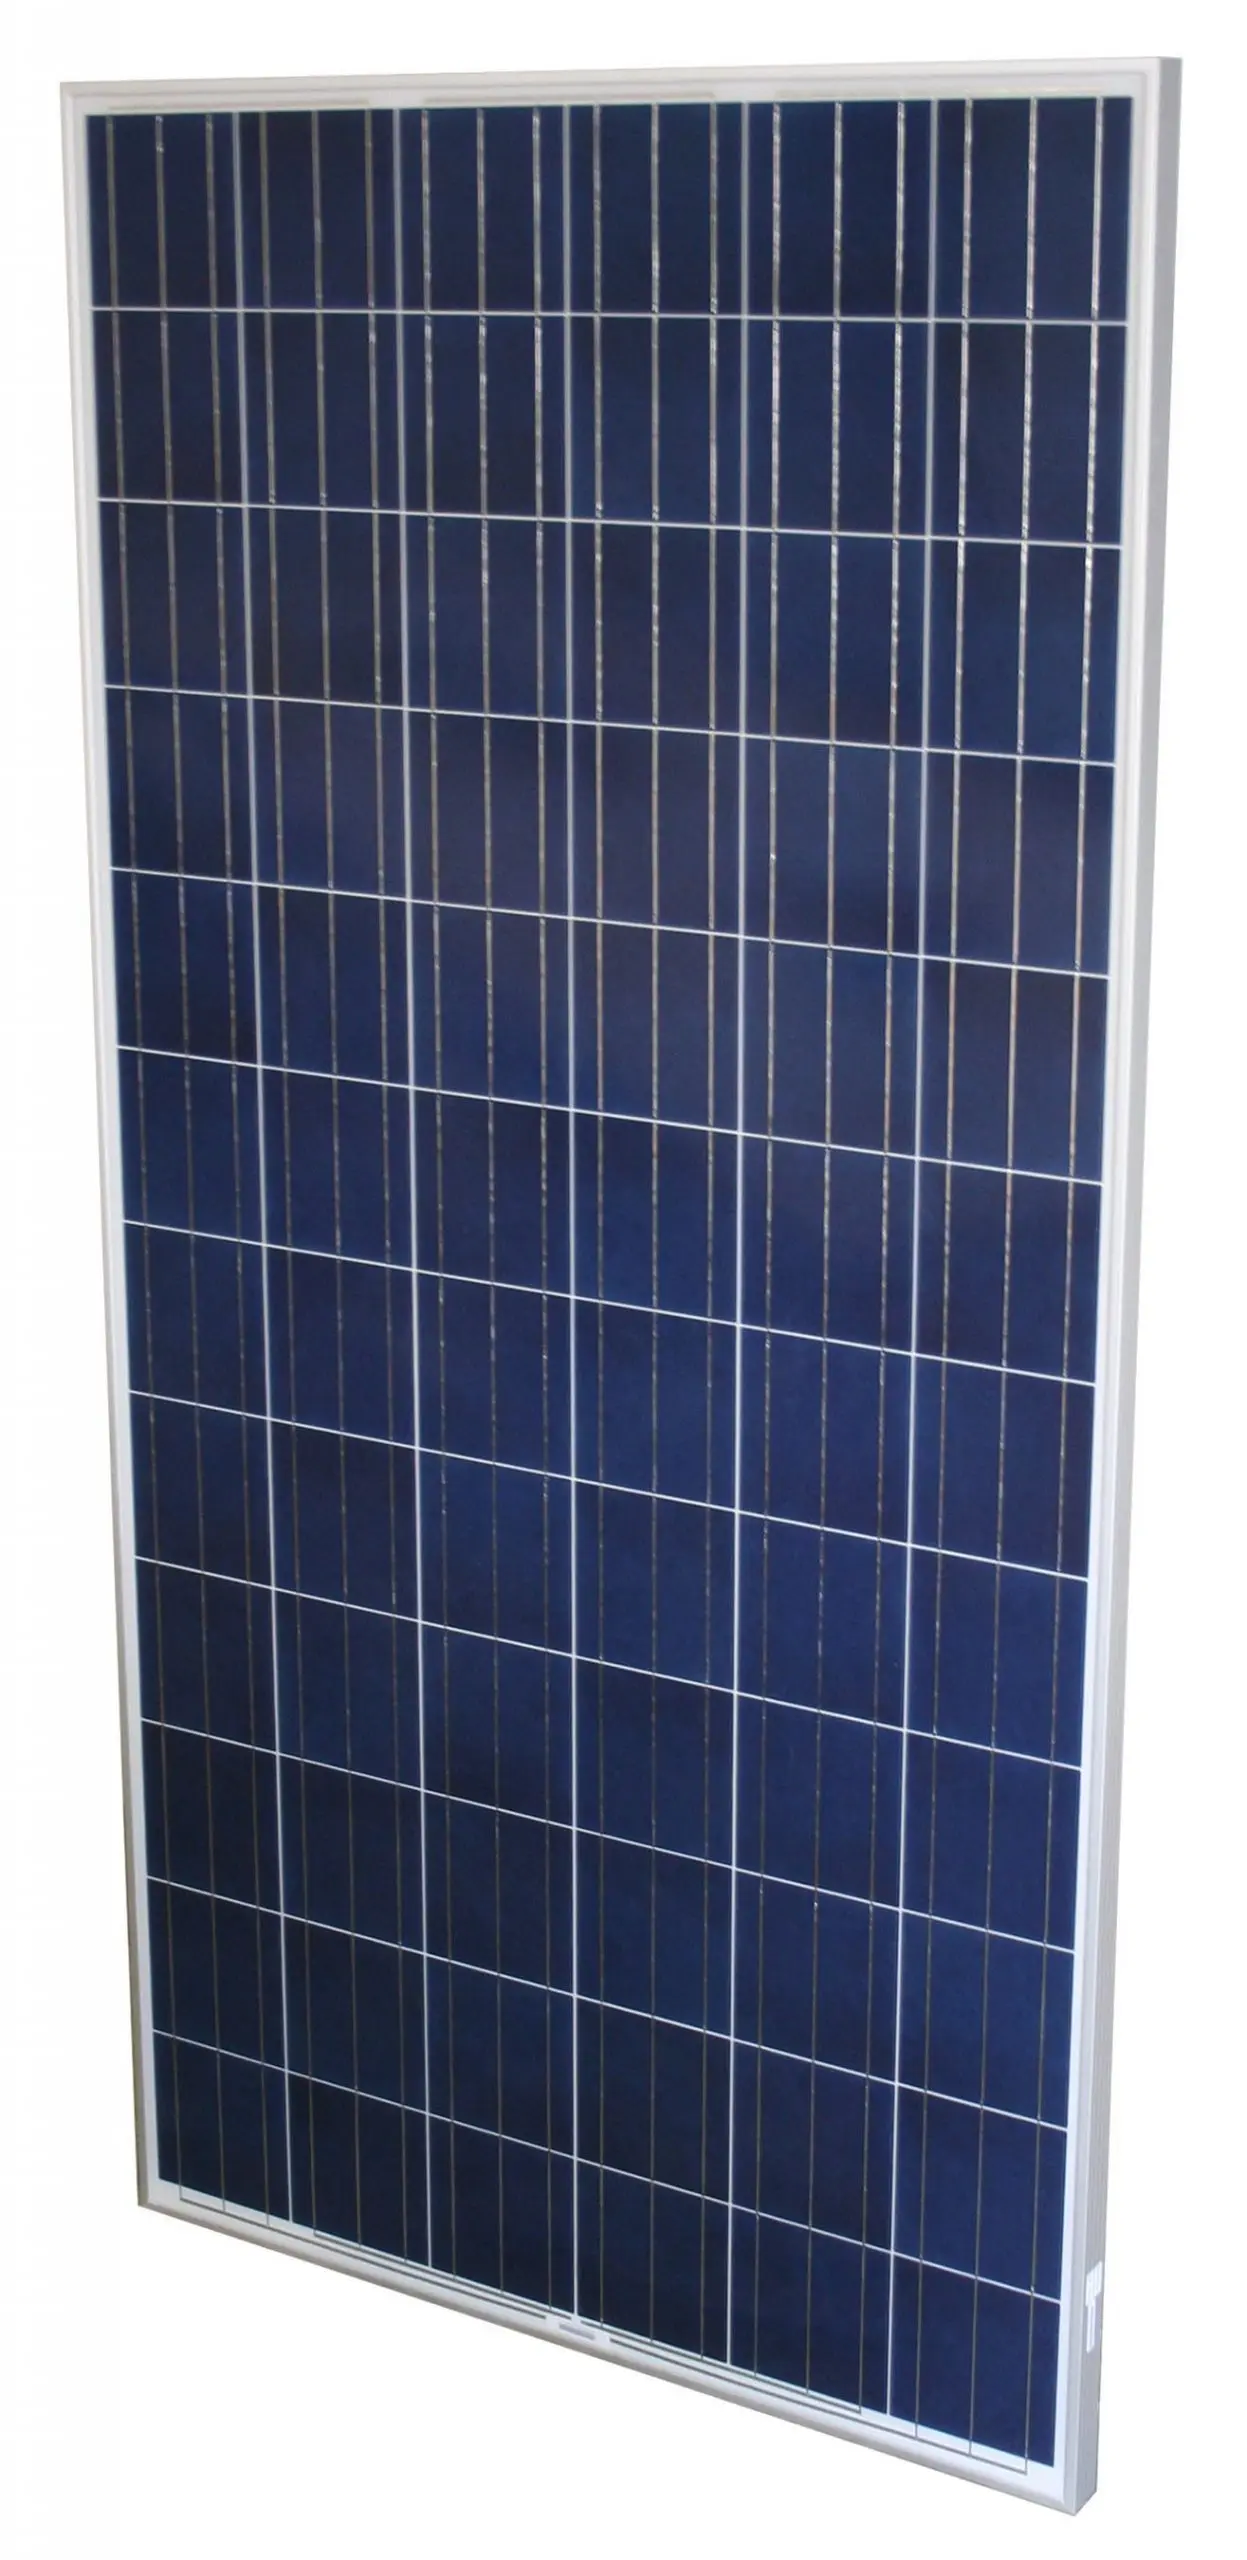 300 watt solar panel price in pakistan - What is the price of solar panel 330w in Pakistan